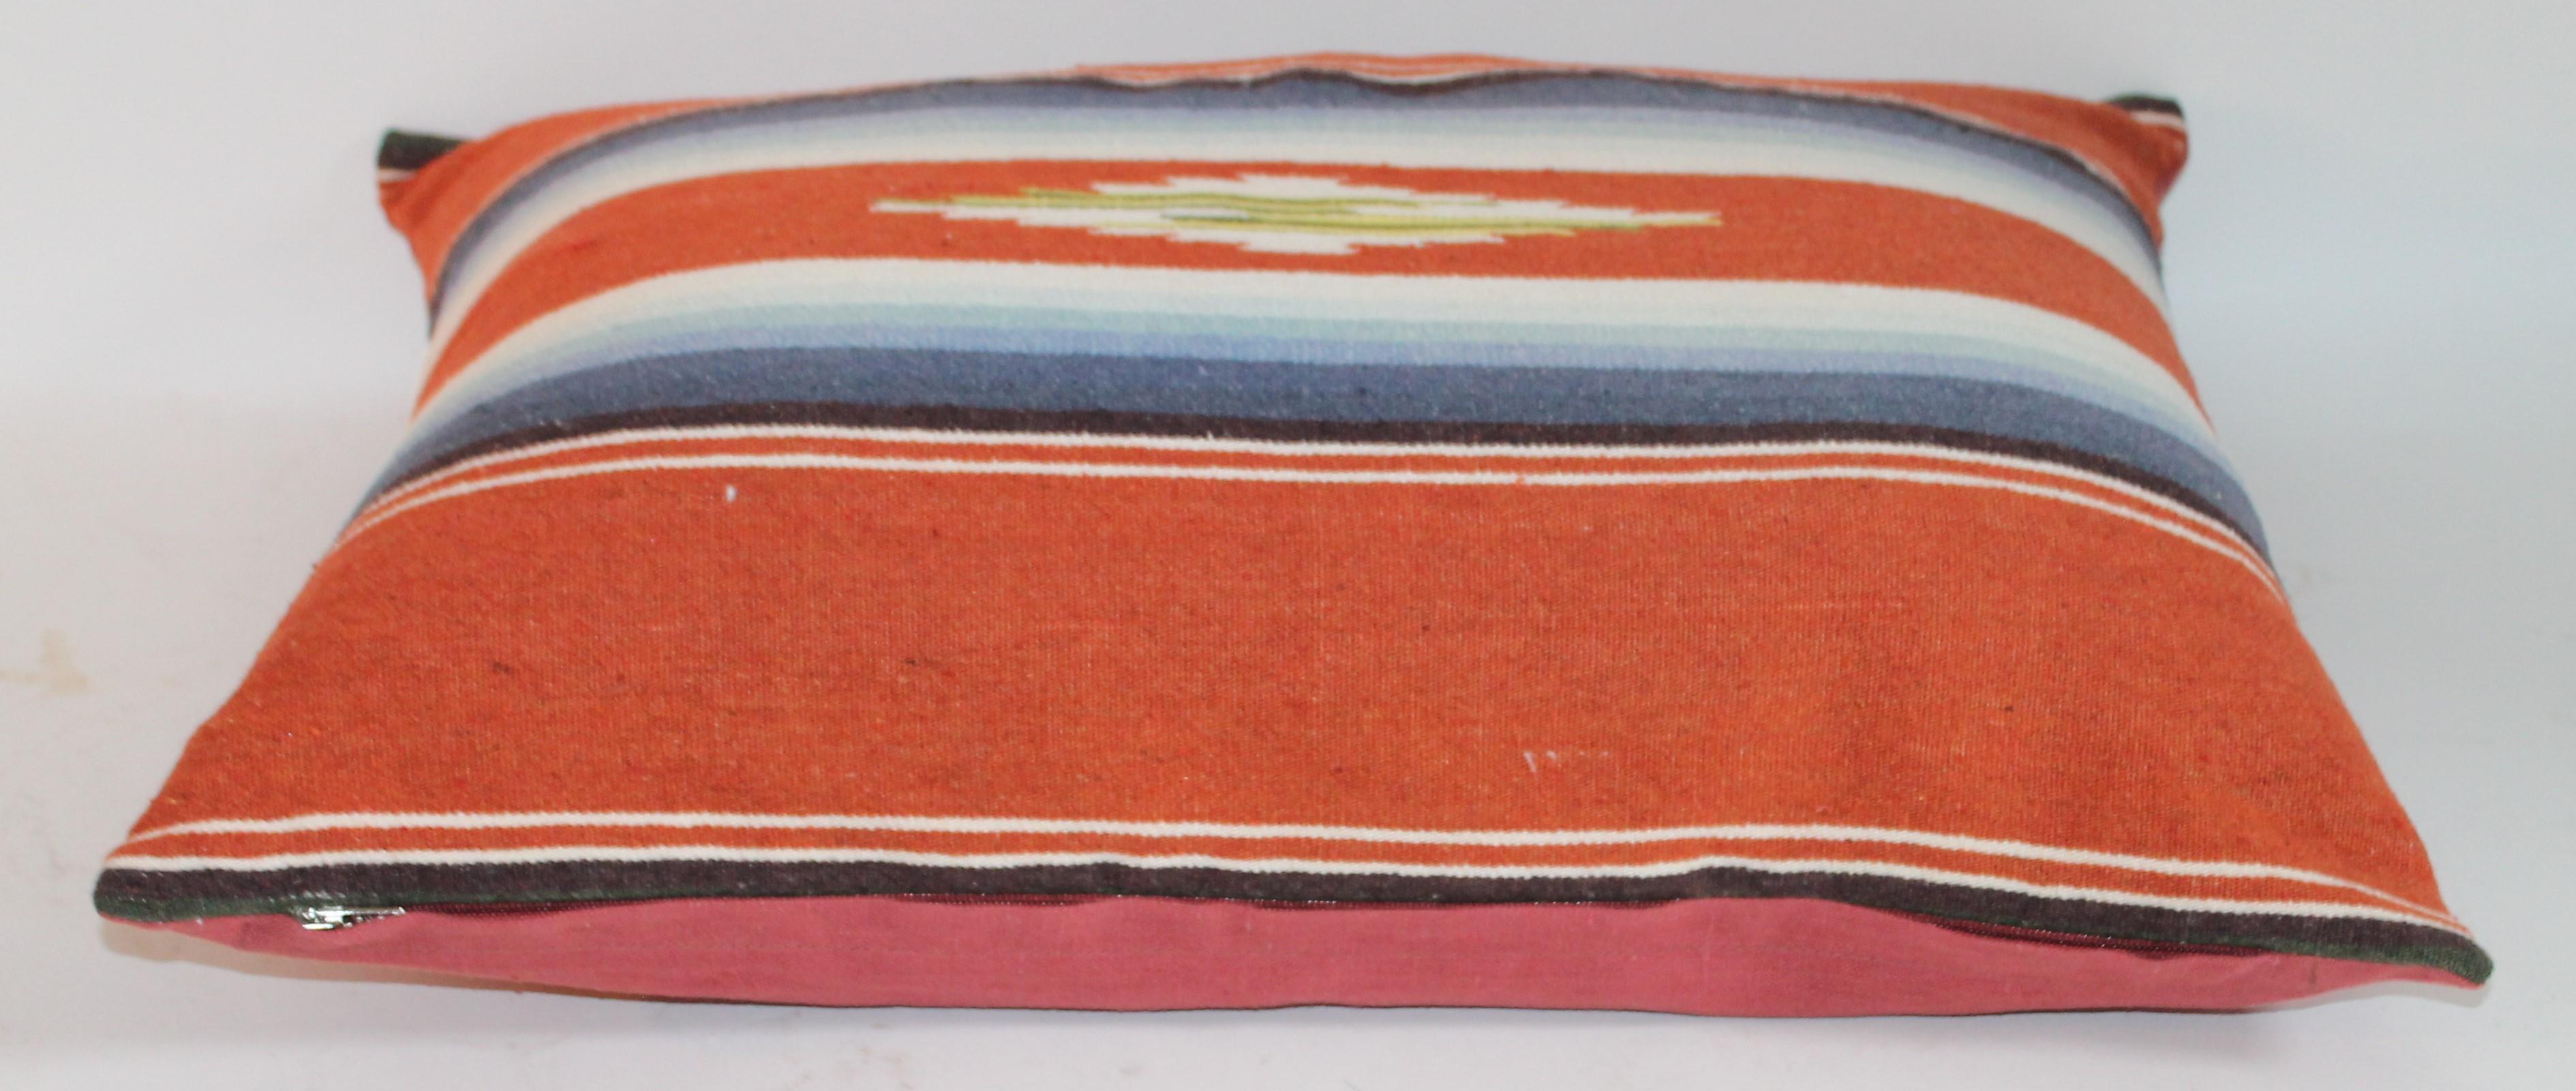 Cotton Serape Pillows in Burnt Orange, Collection of Three